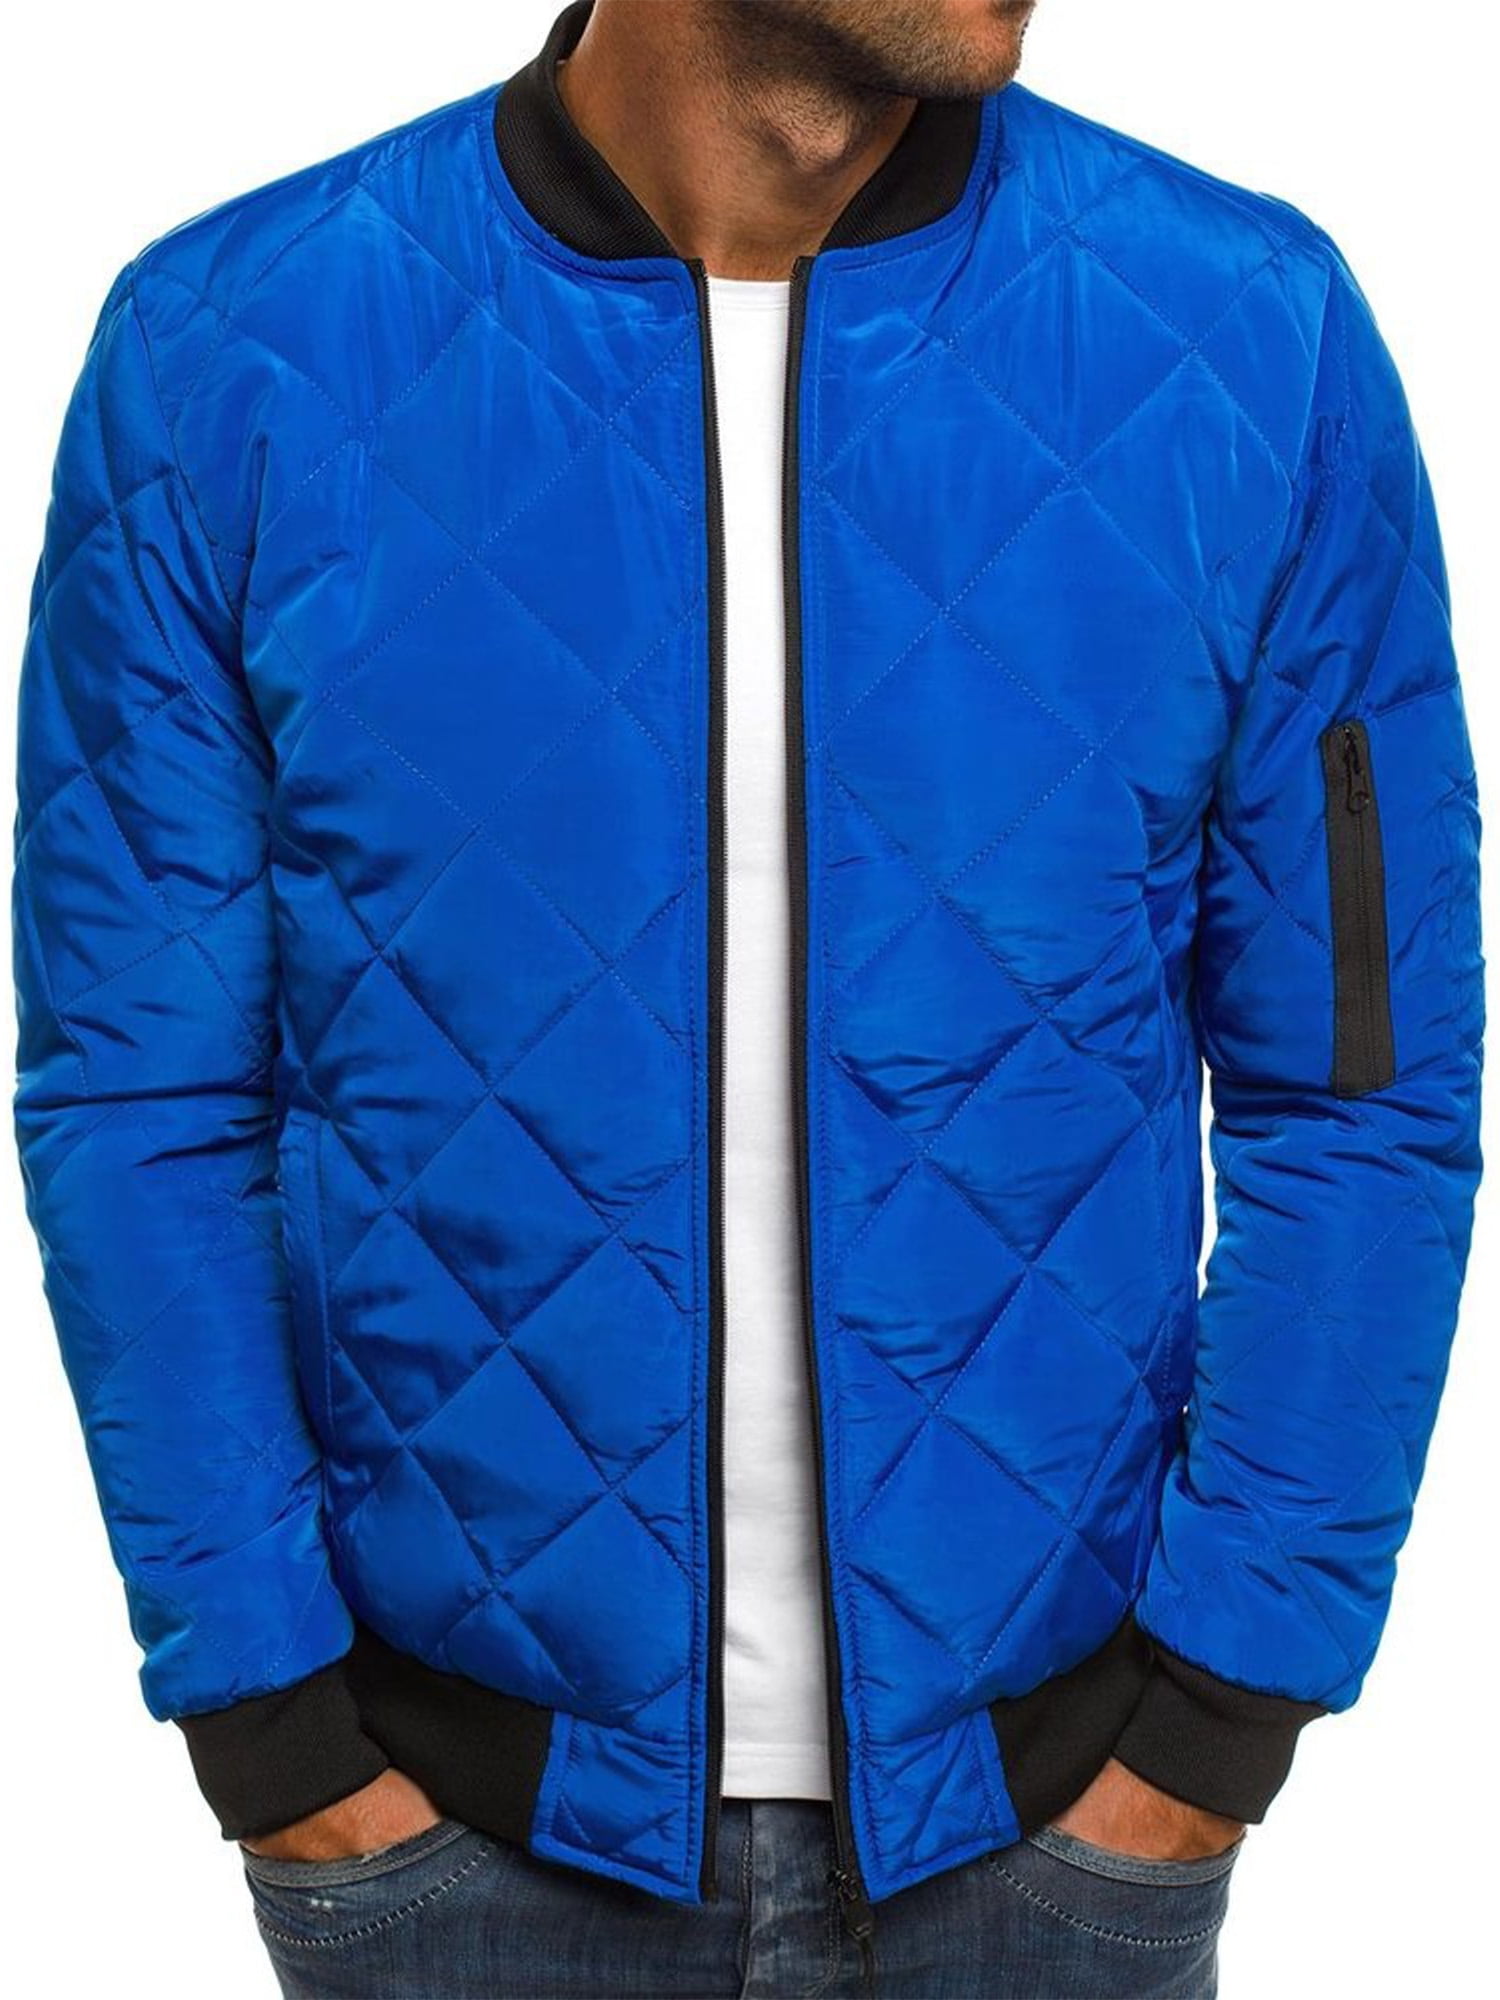 Winter Jacket for Men Big and Tall Bomber Jacket Thicken Warm Jacket Varsity Jacket Outwear Pilot Jacket Navy